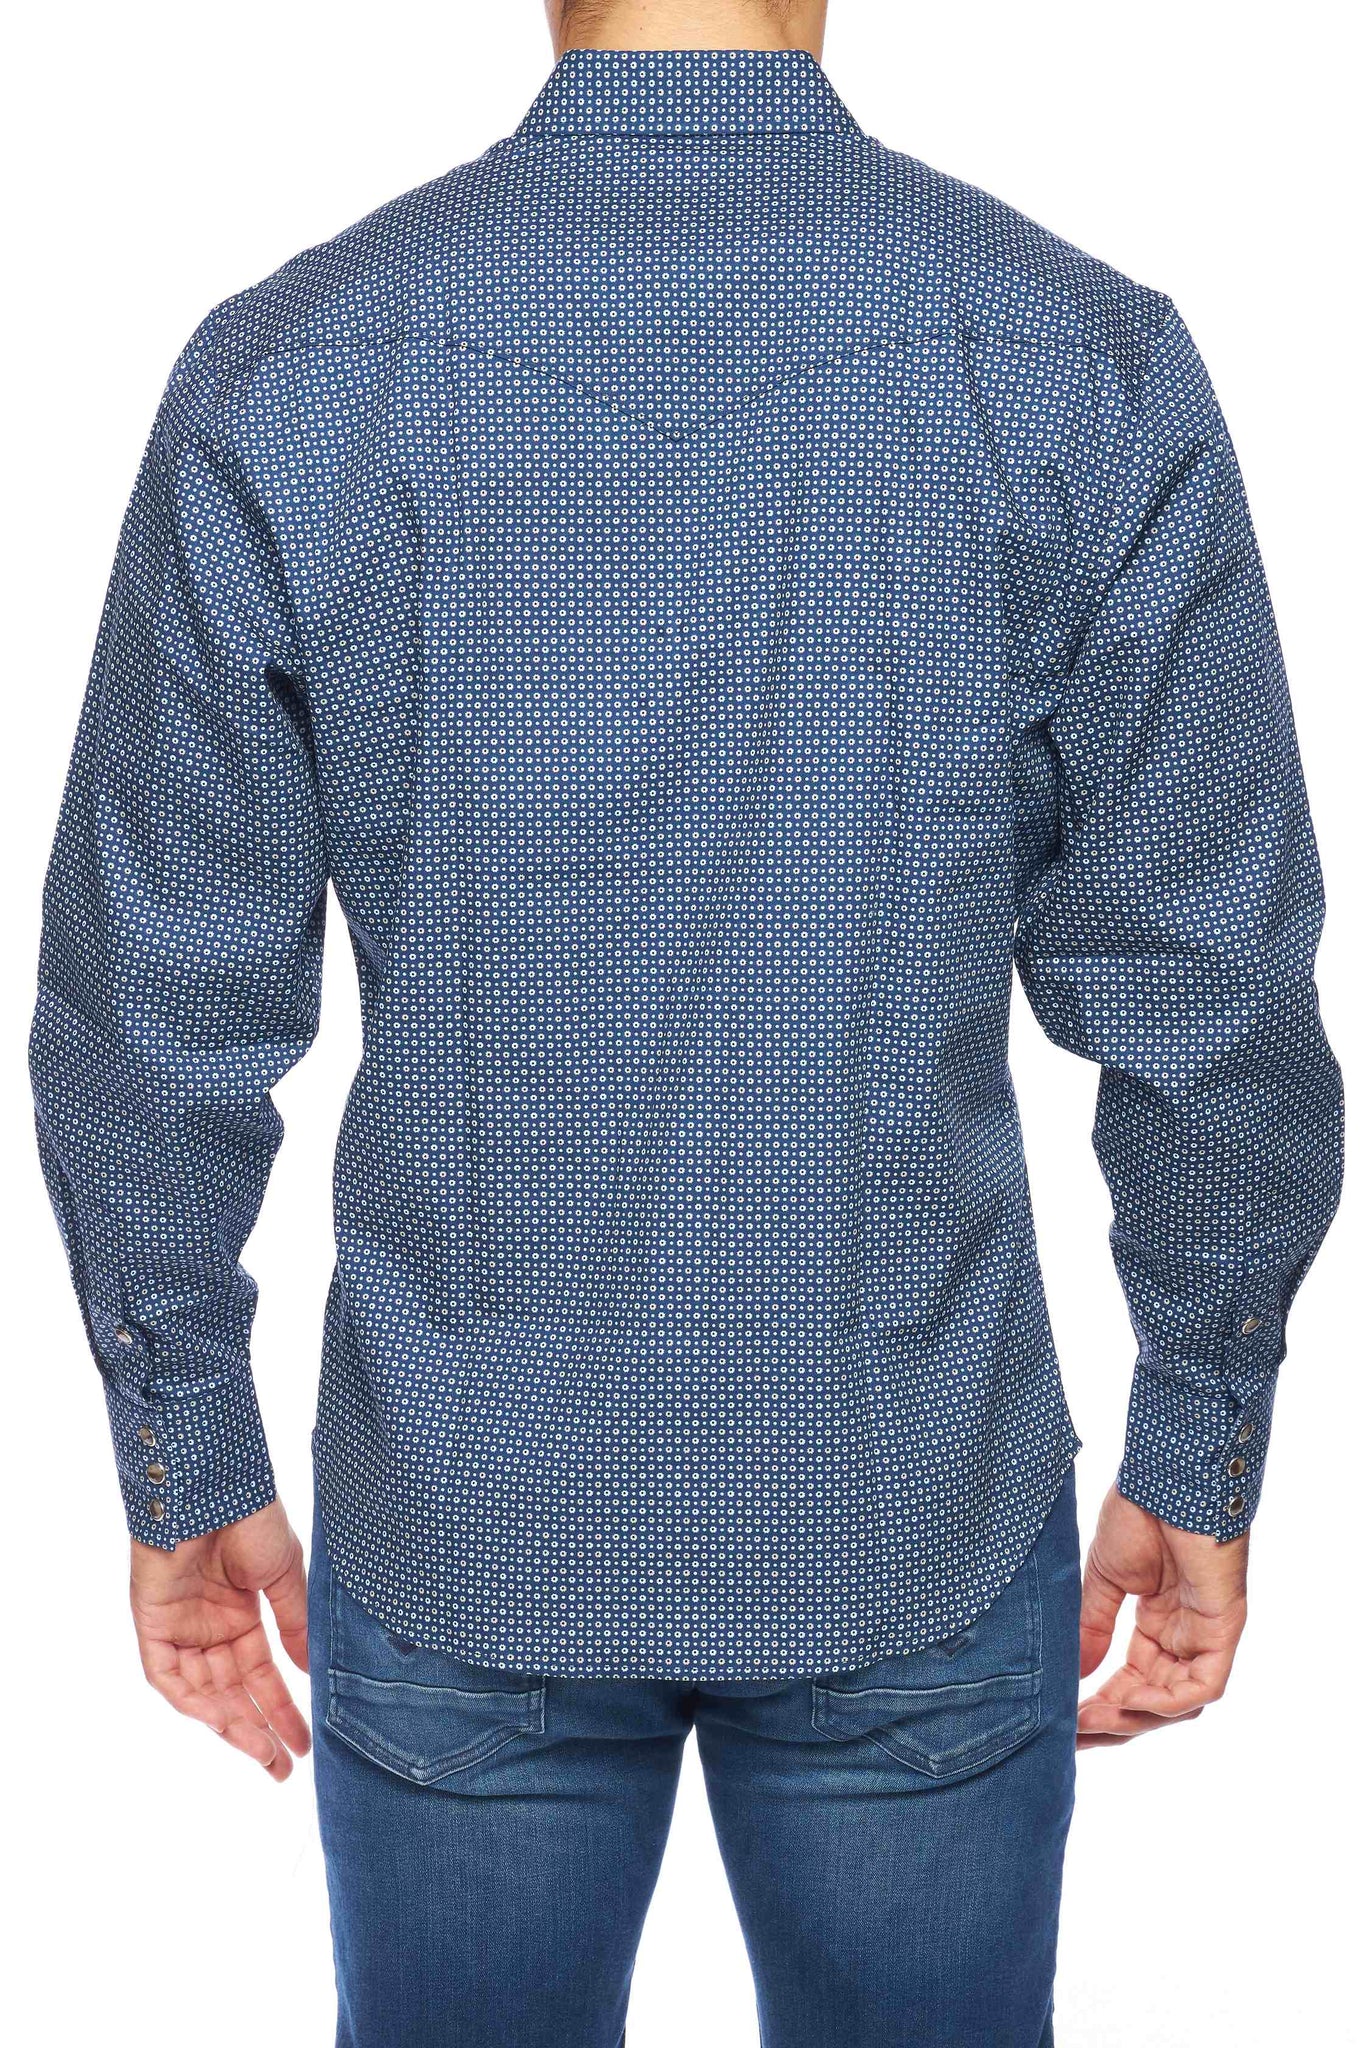 Men's Western Pearl Snaps Print Shirt - PS100L-158